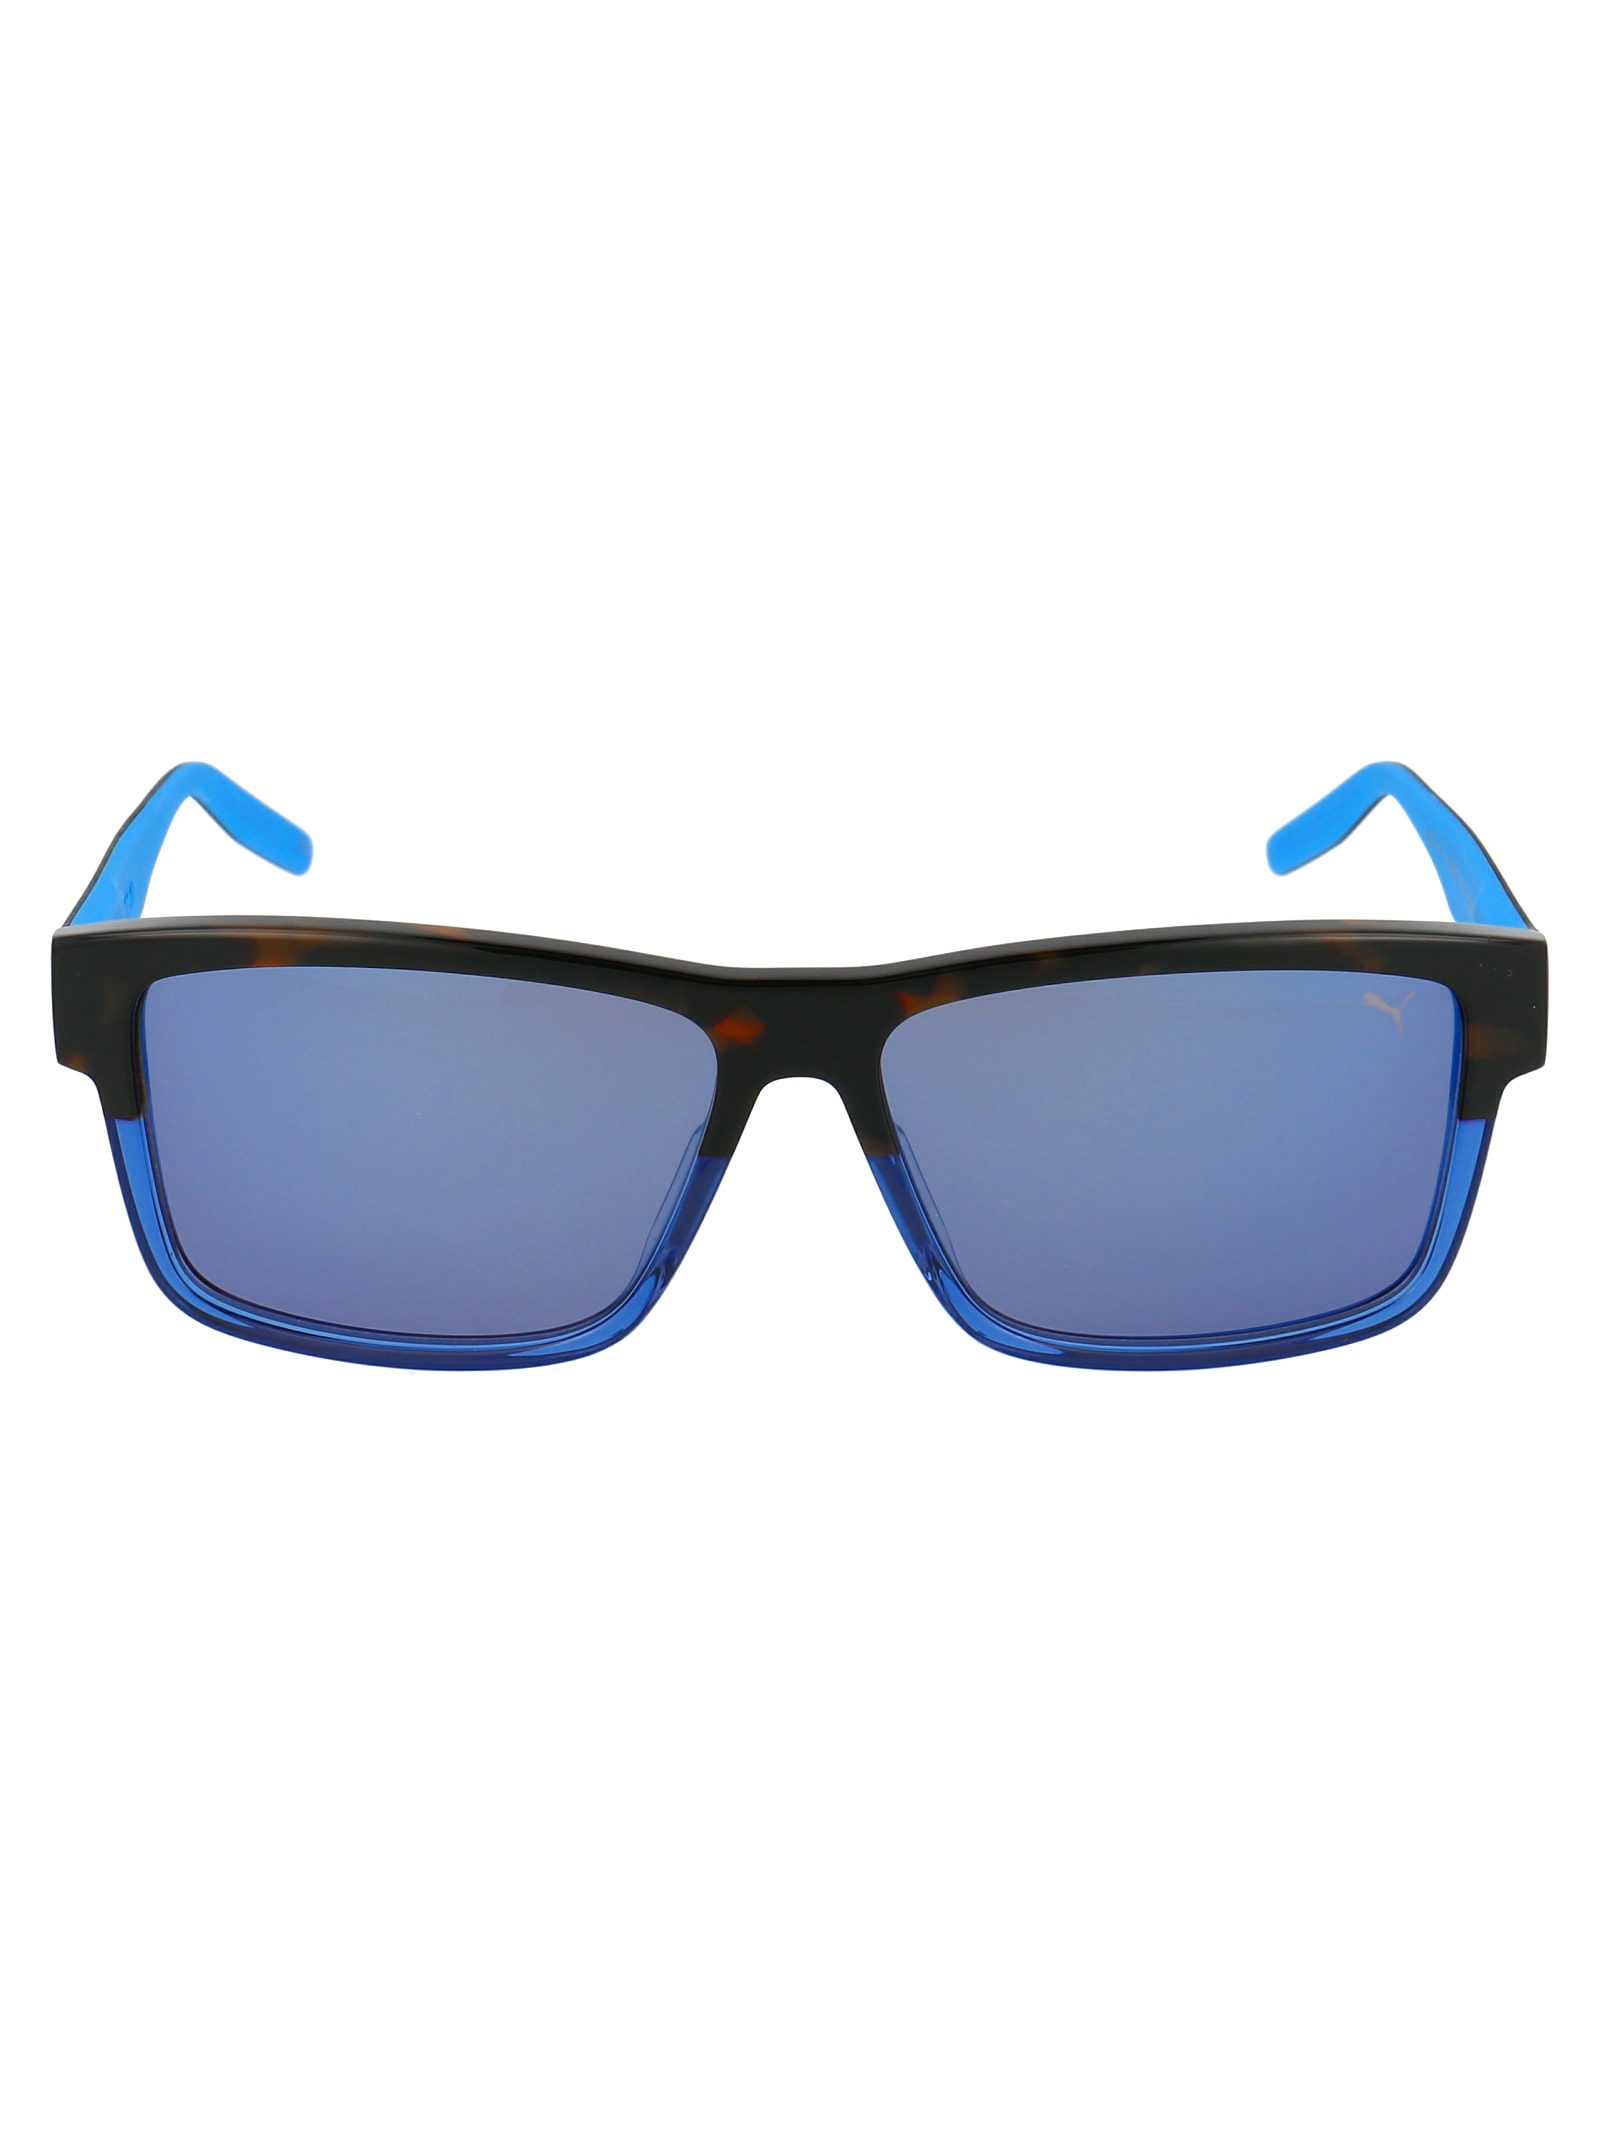 puma sunglasses blue